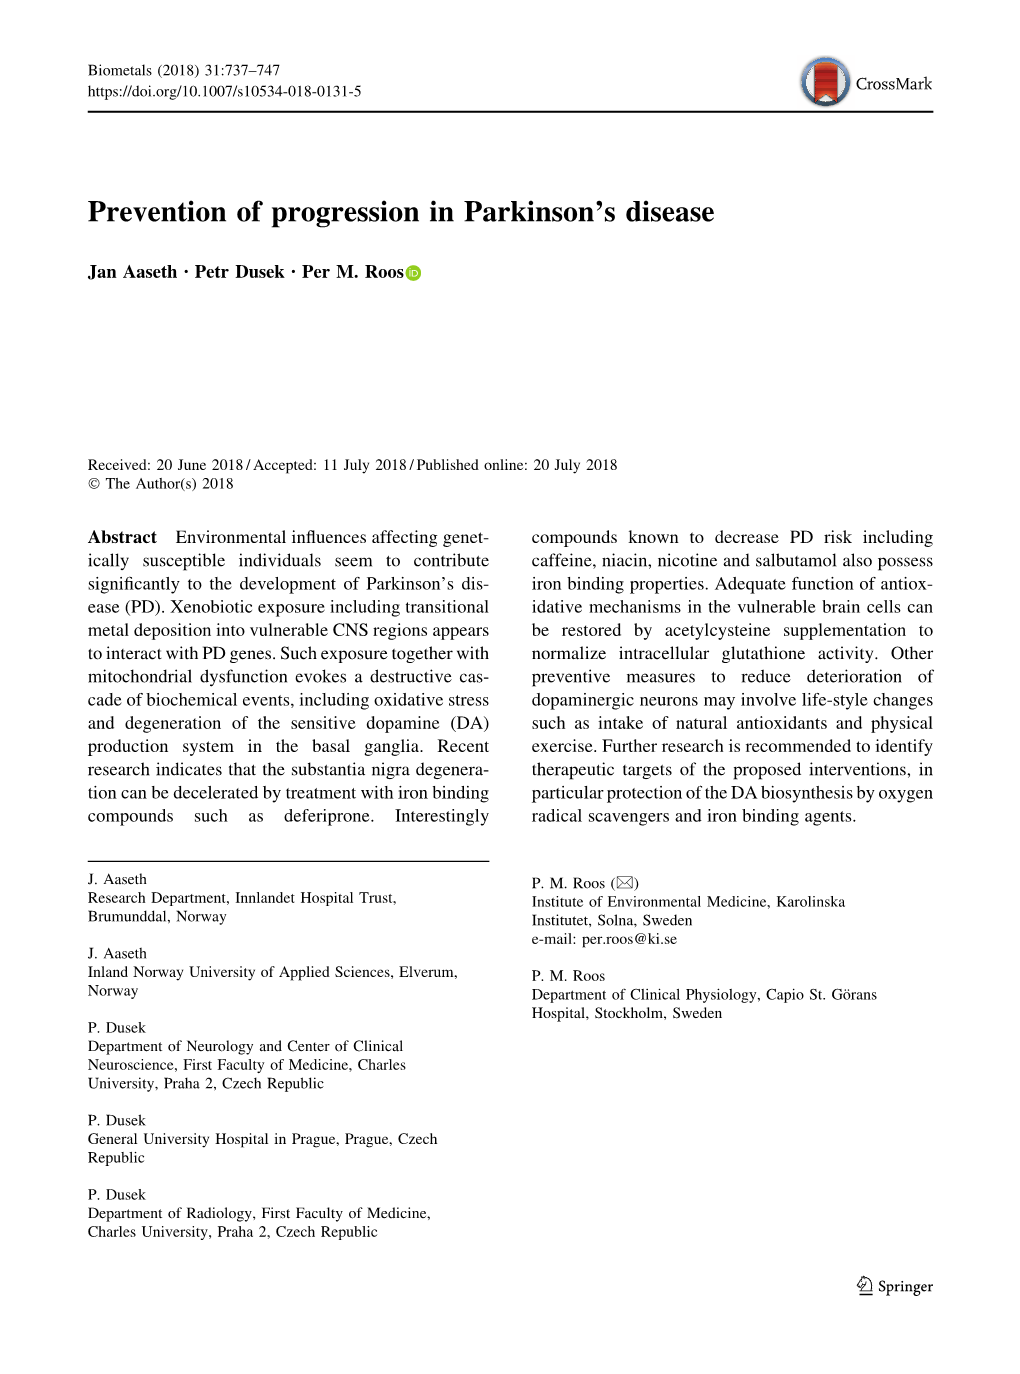 Prevention of Progression in Parkinson's Disease